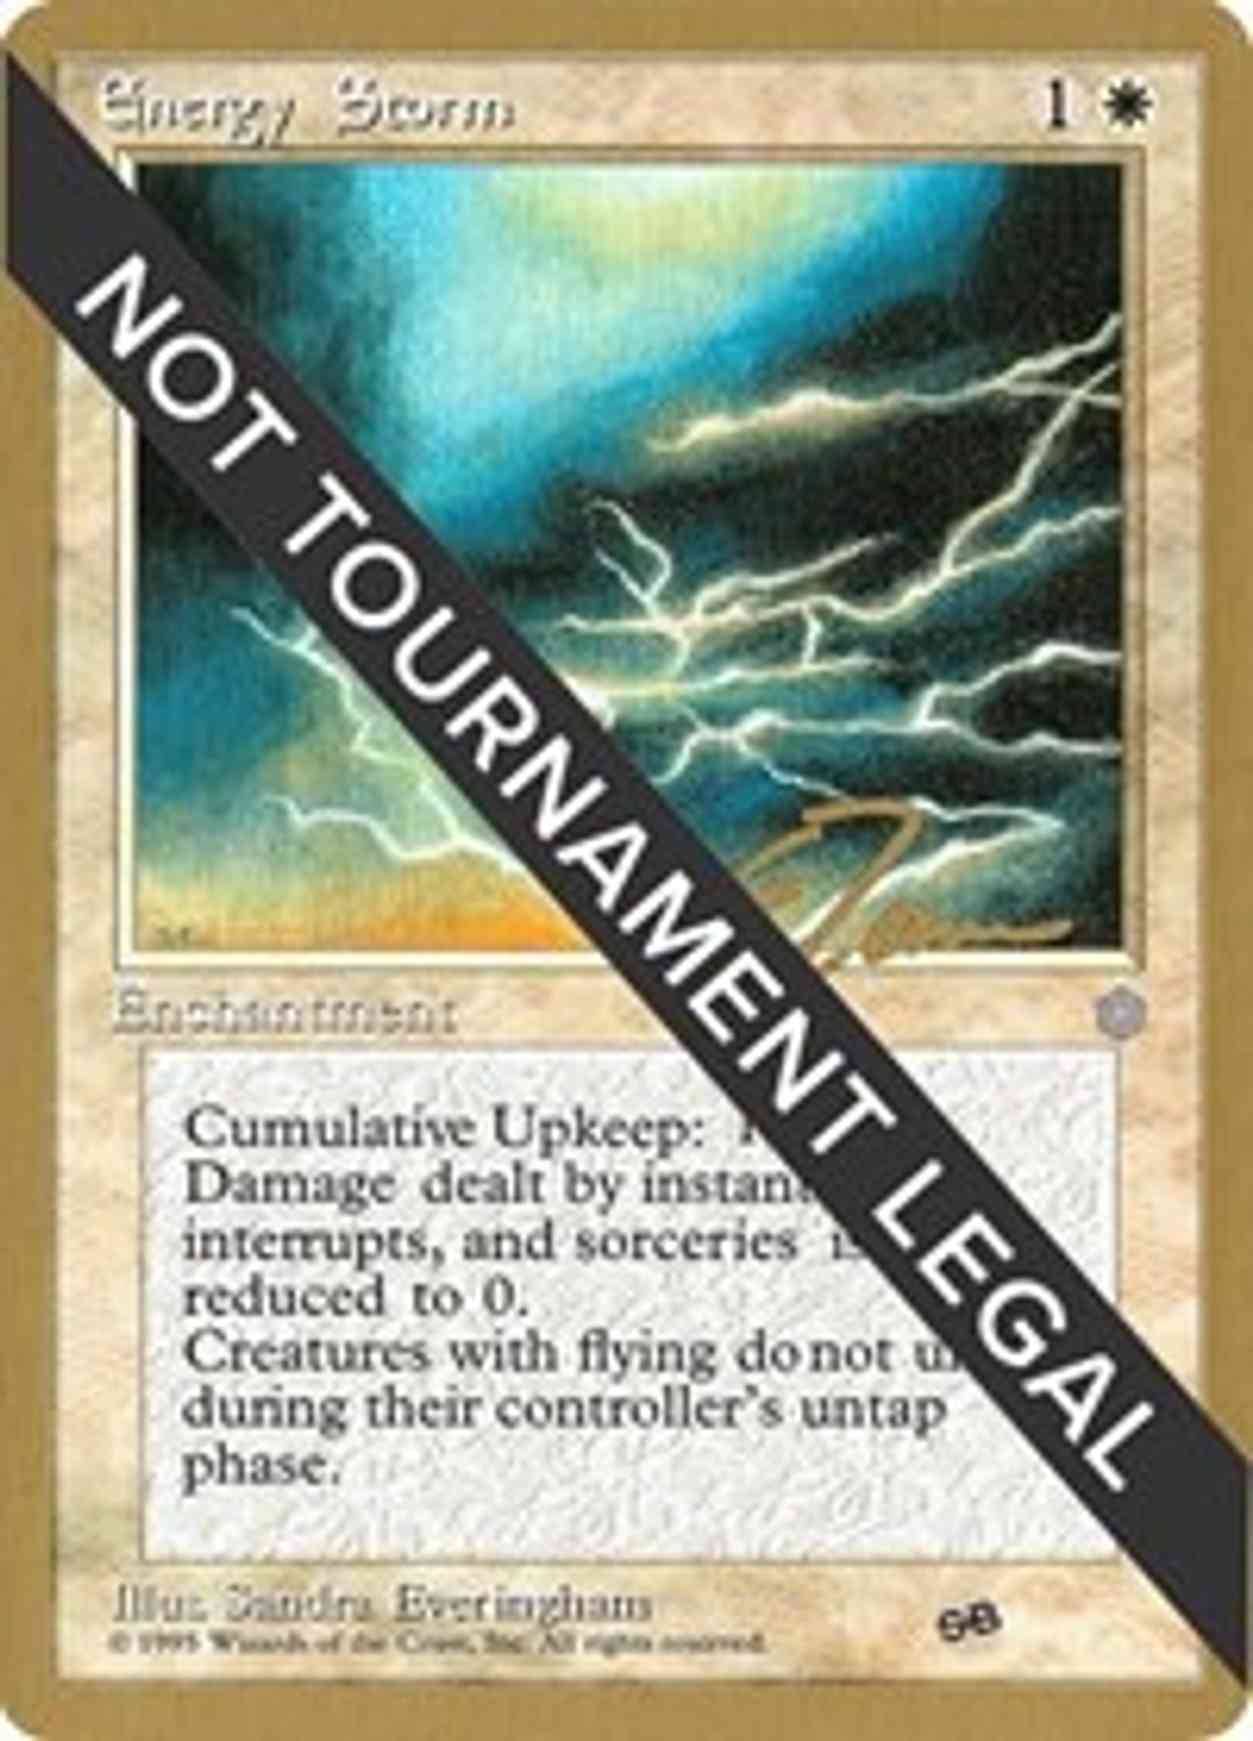 Energy Storm - 1996 Eric Tam (ICE) (SB) magic card front